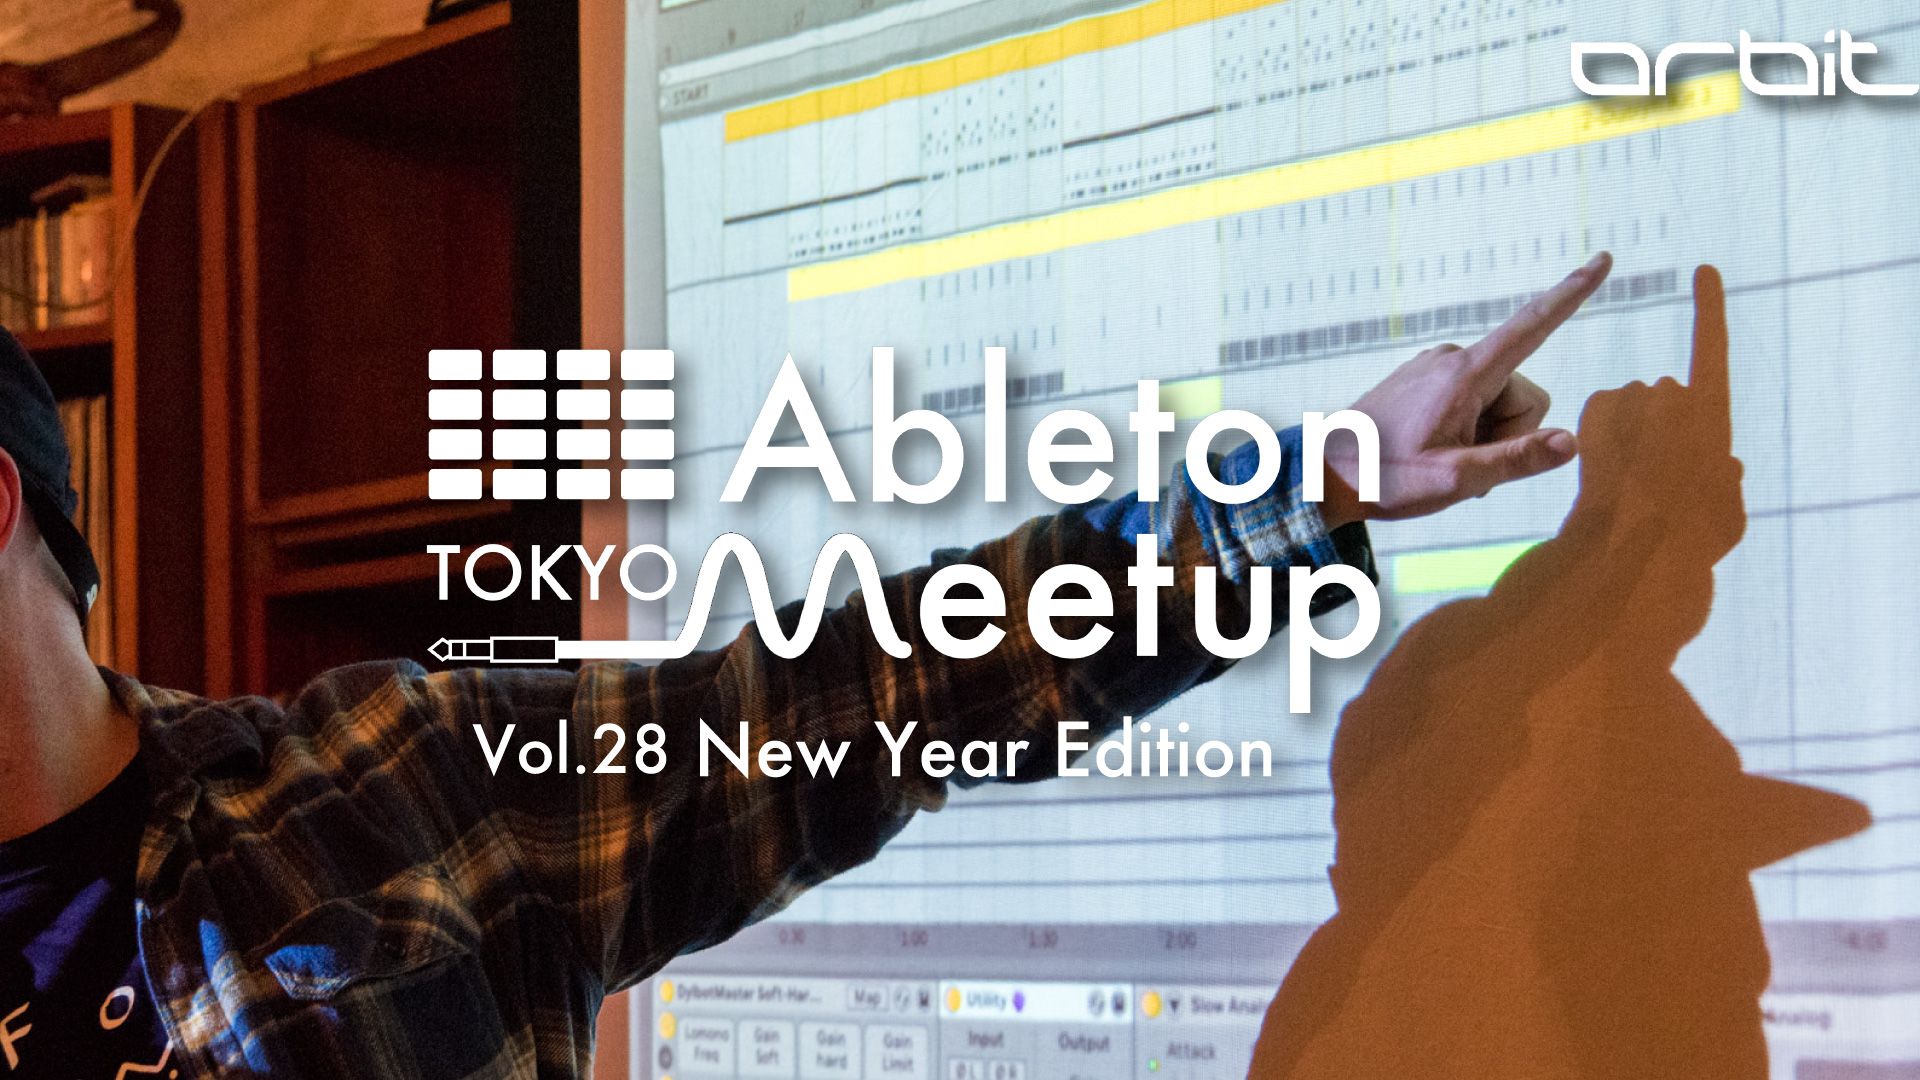 Ableton Meetup Tokyo Vol.28